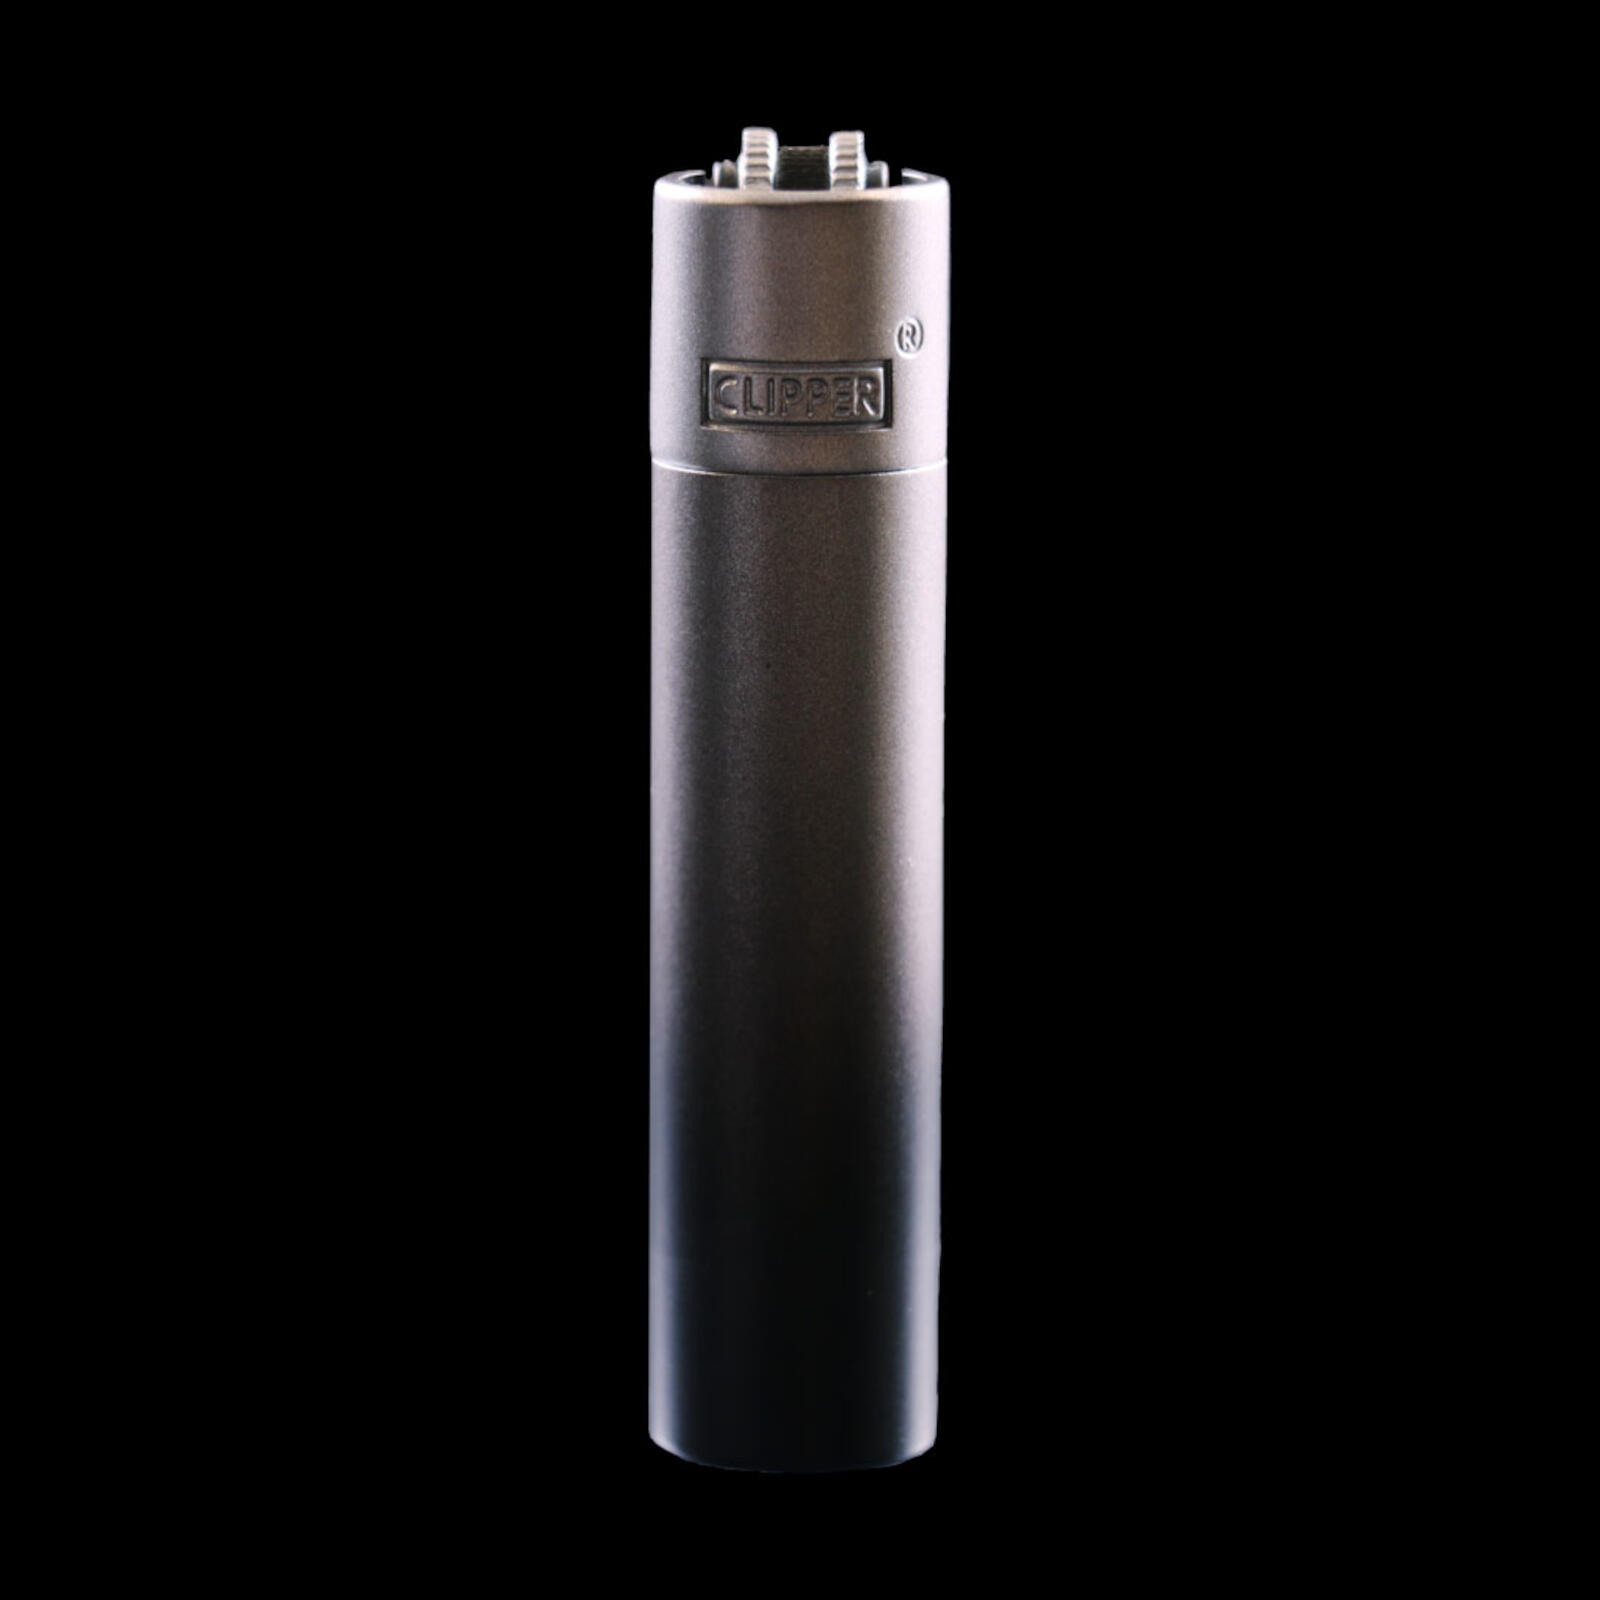 Clipper Metall-Feuerzeug | Black Gradient inkl. Metallbox